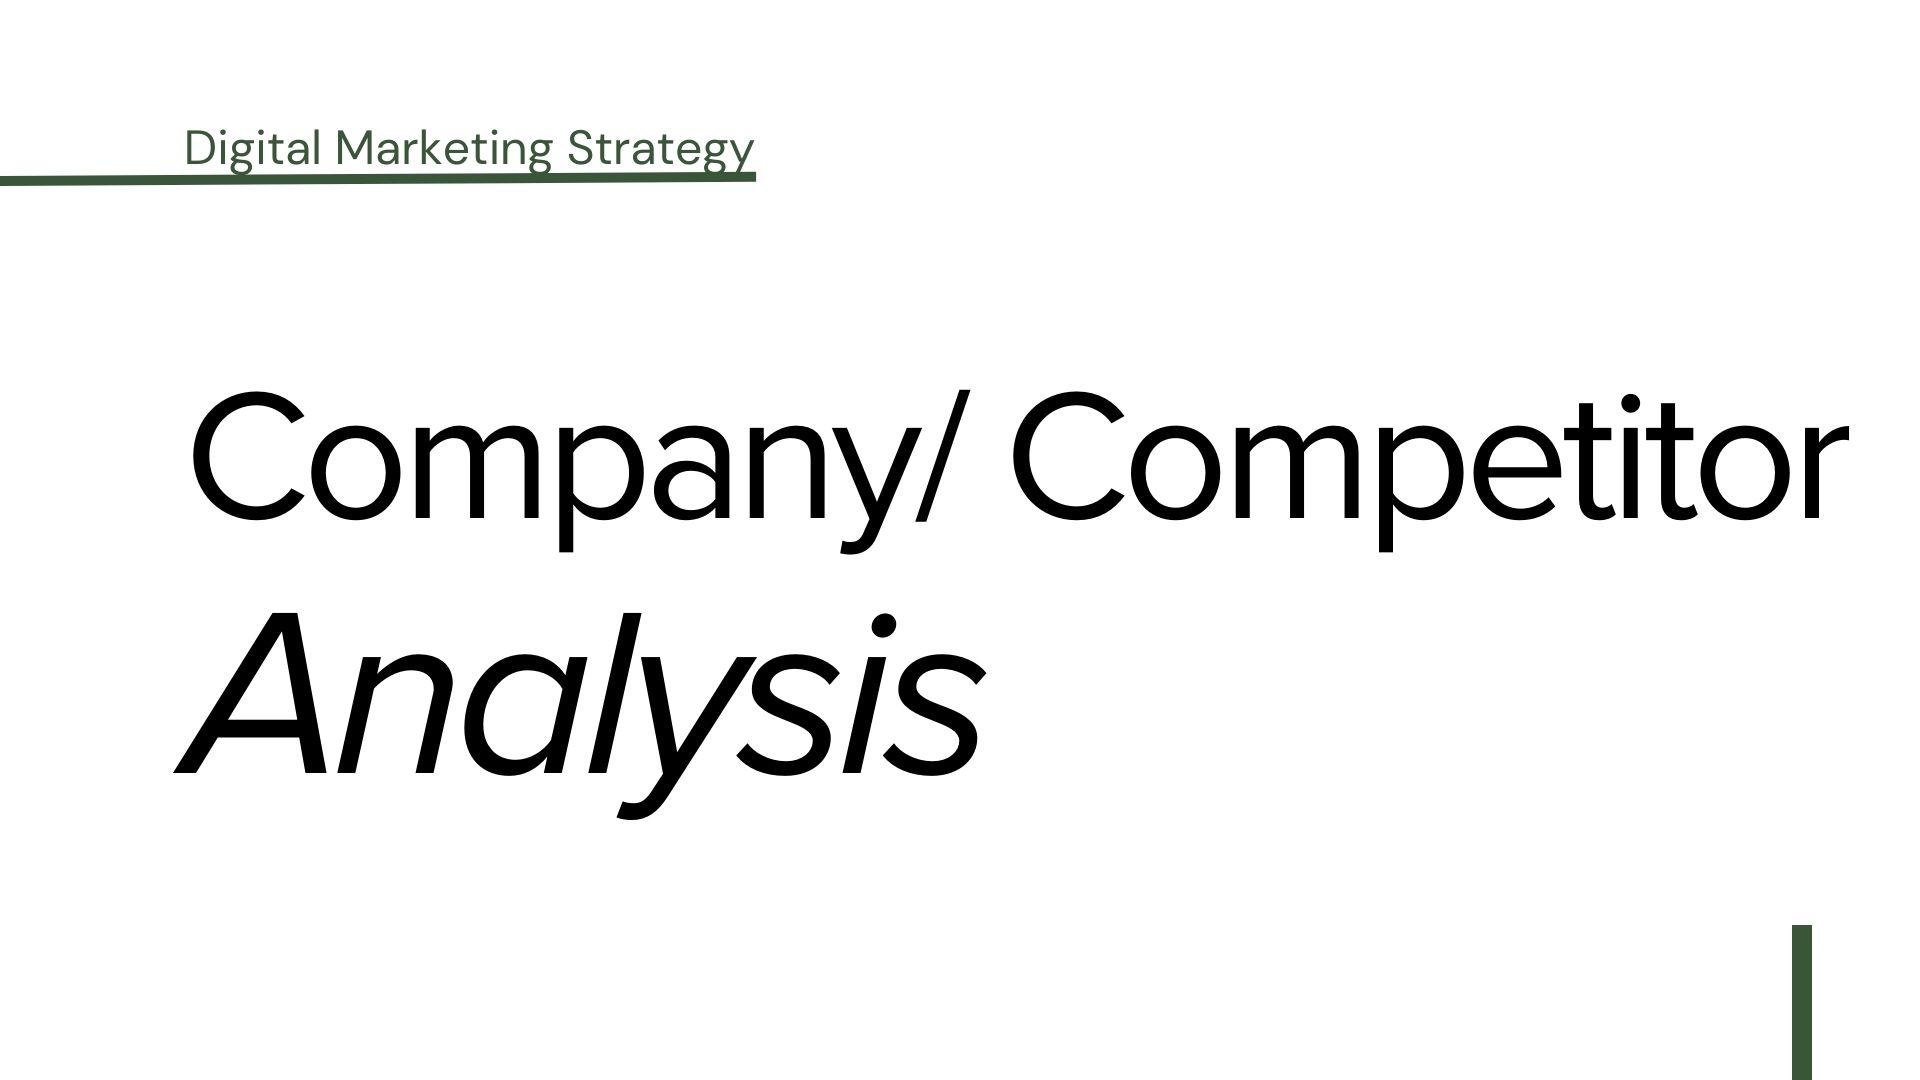 Digital Marketing Strategy: Company/ Competitor Analysis